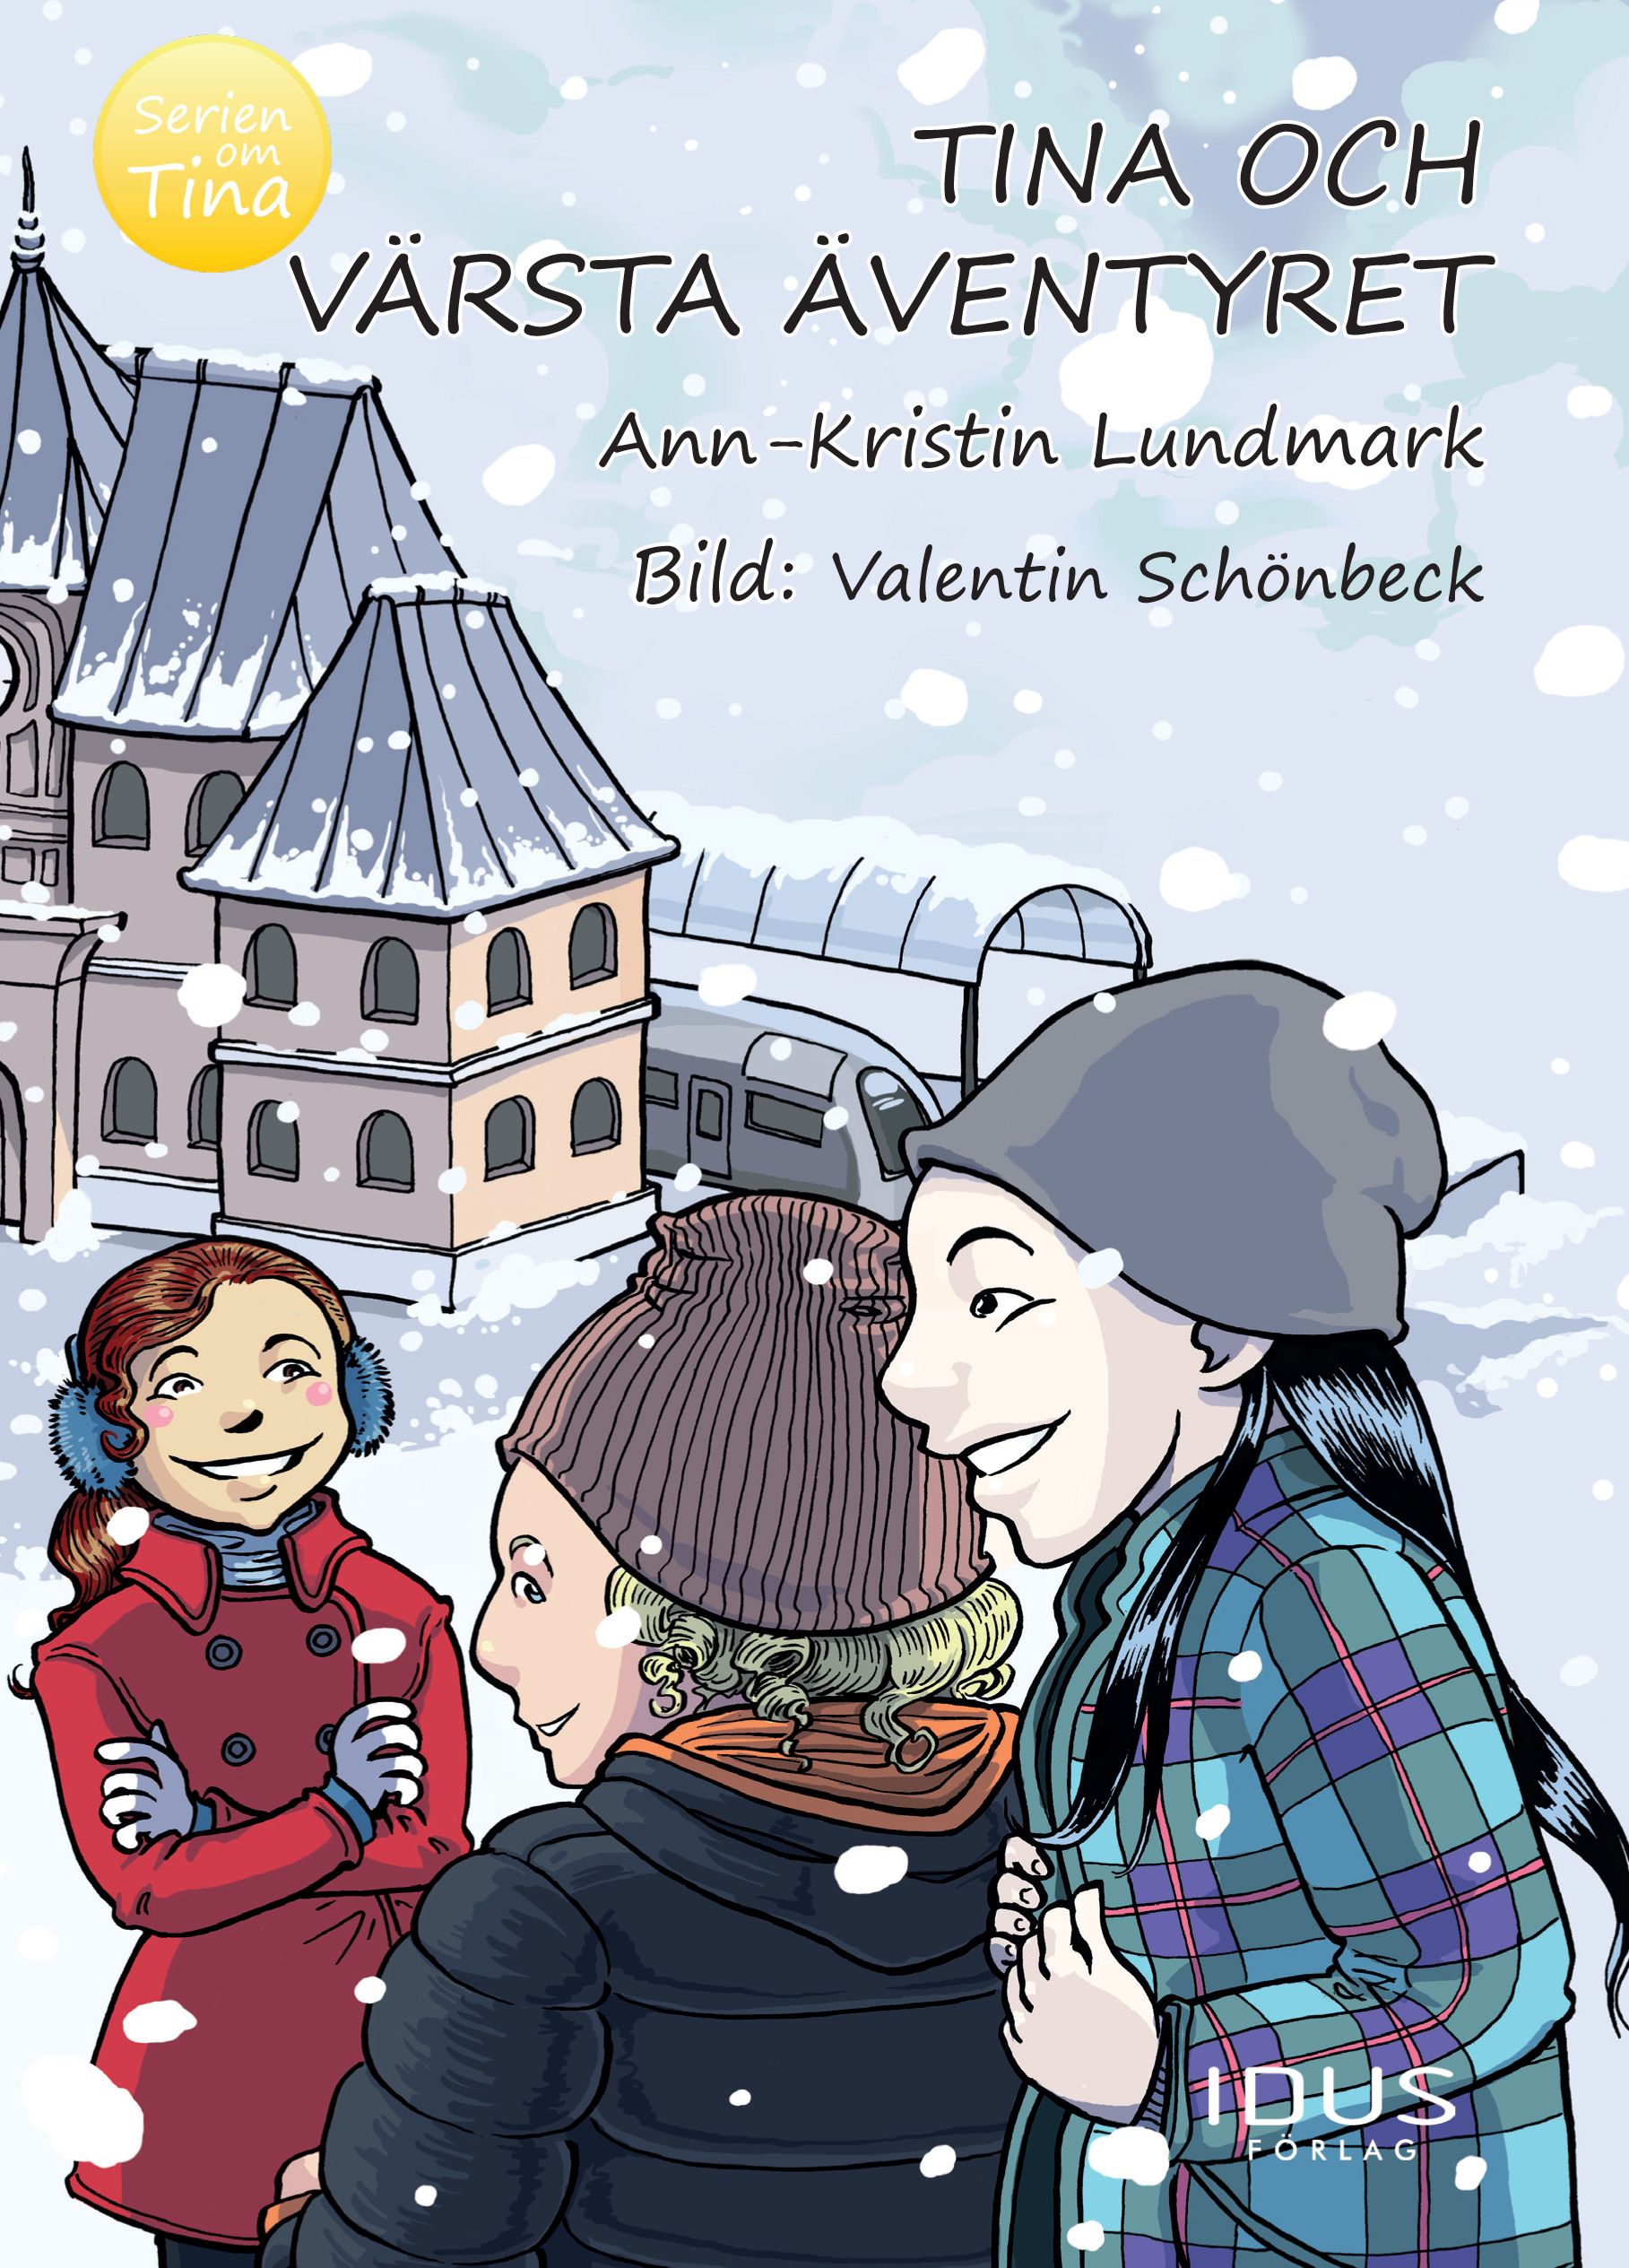 Tina och värsta äventyret, eBook by Ann-Kristin Lundmark